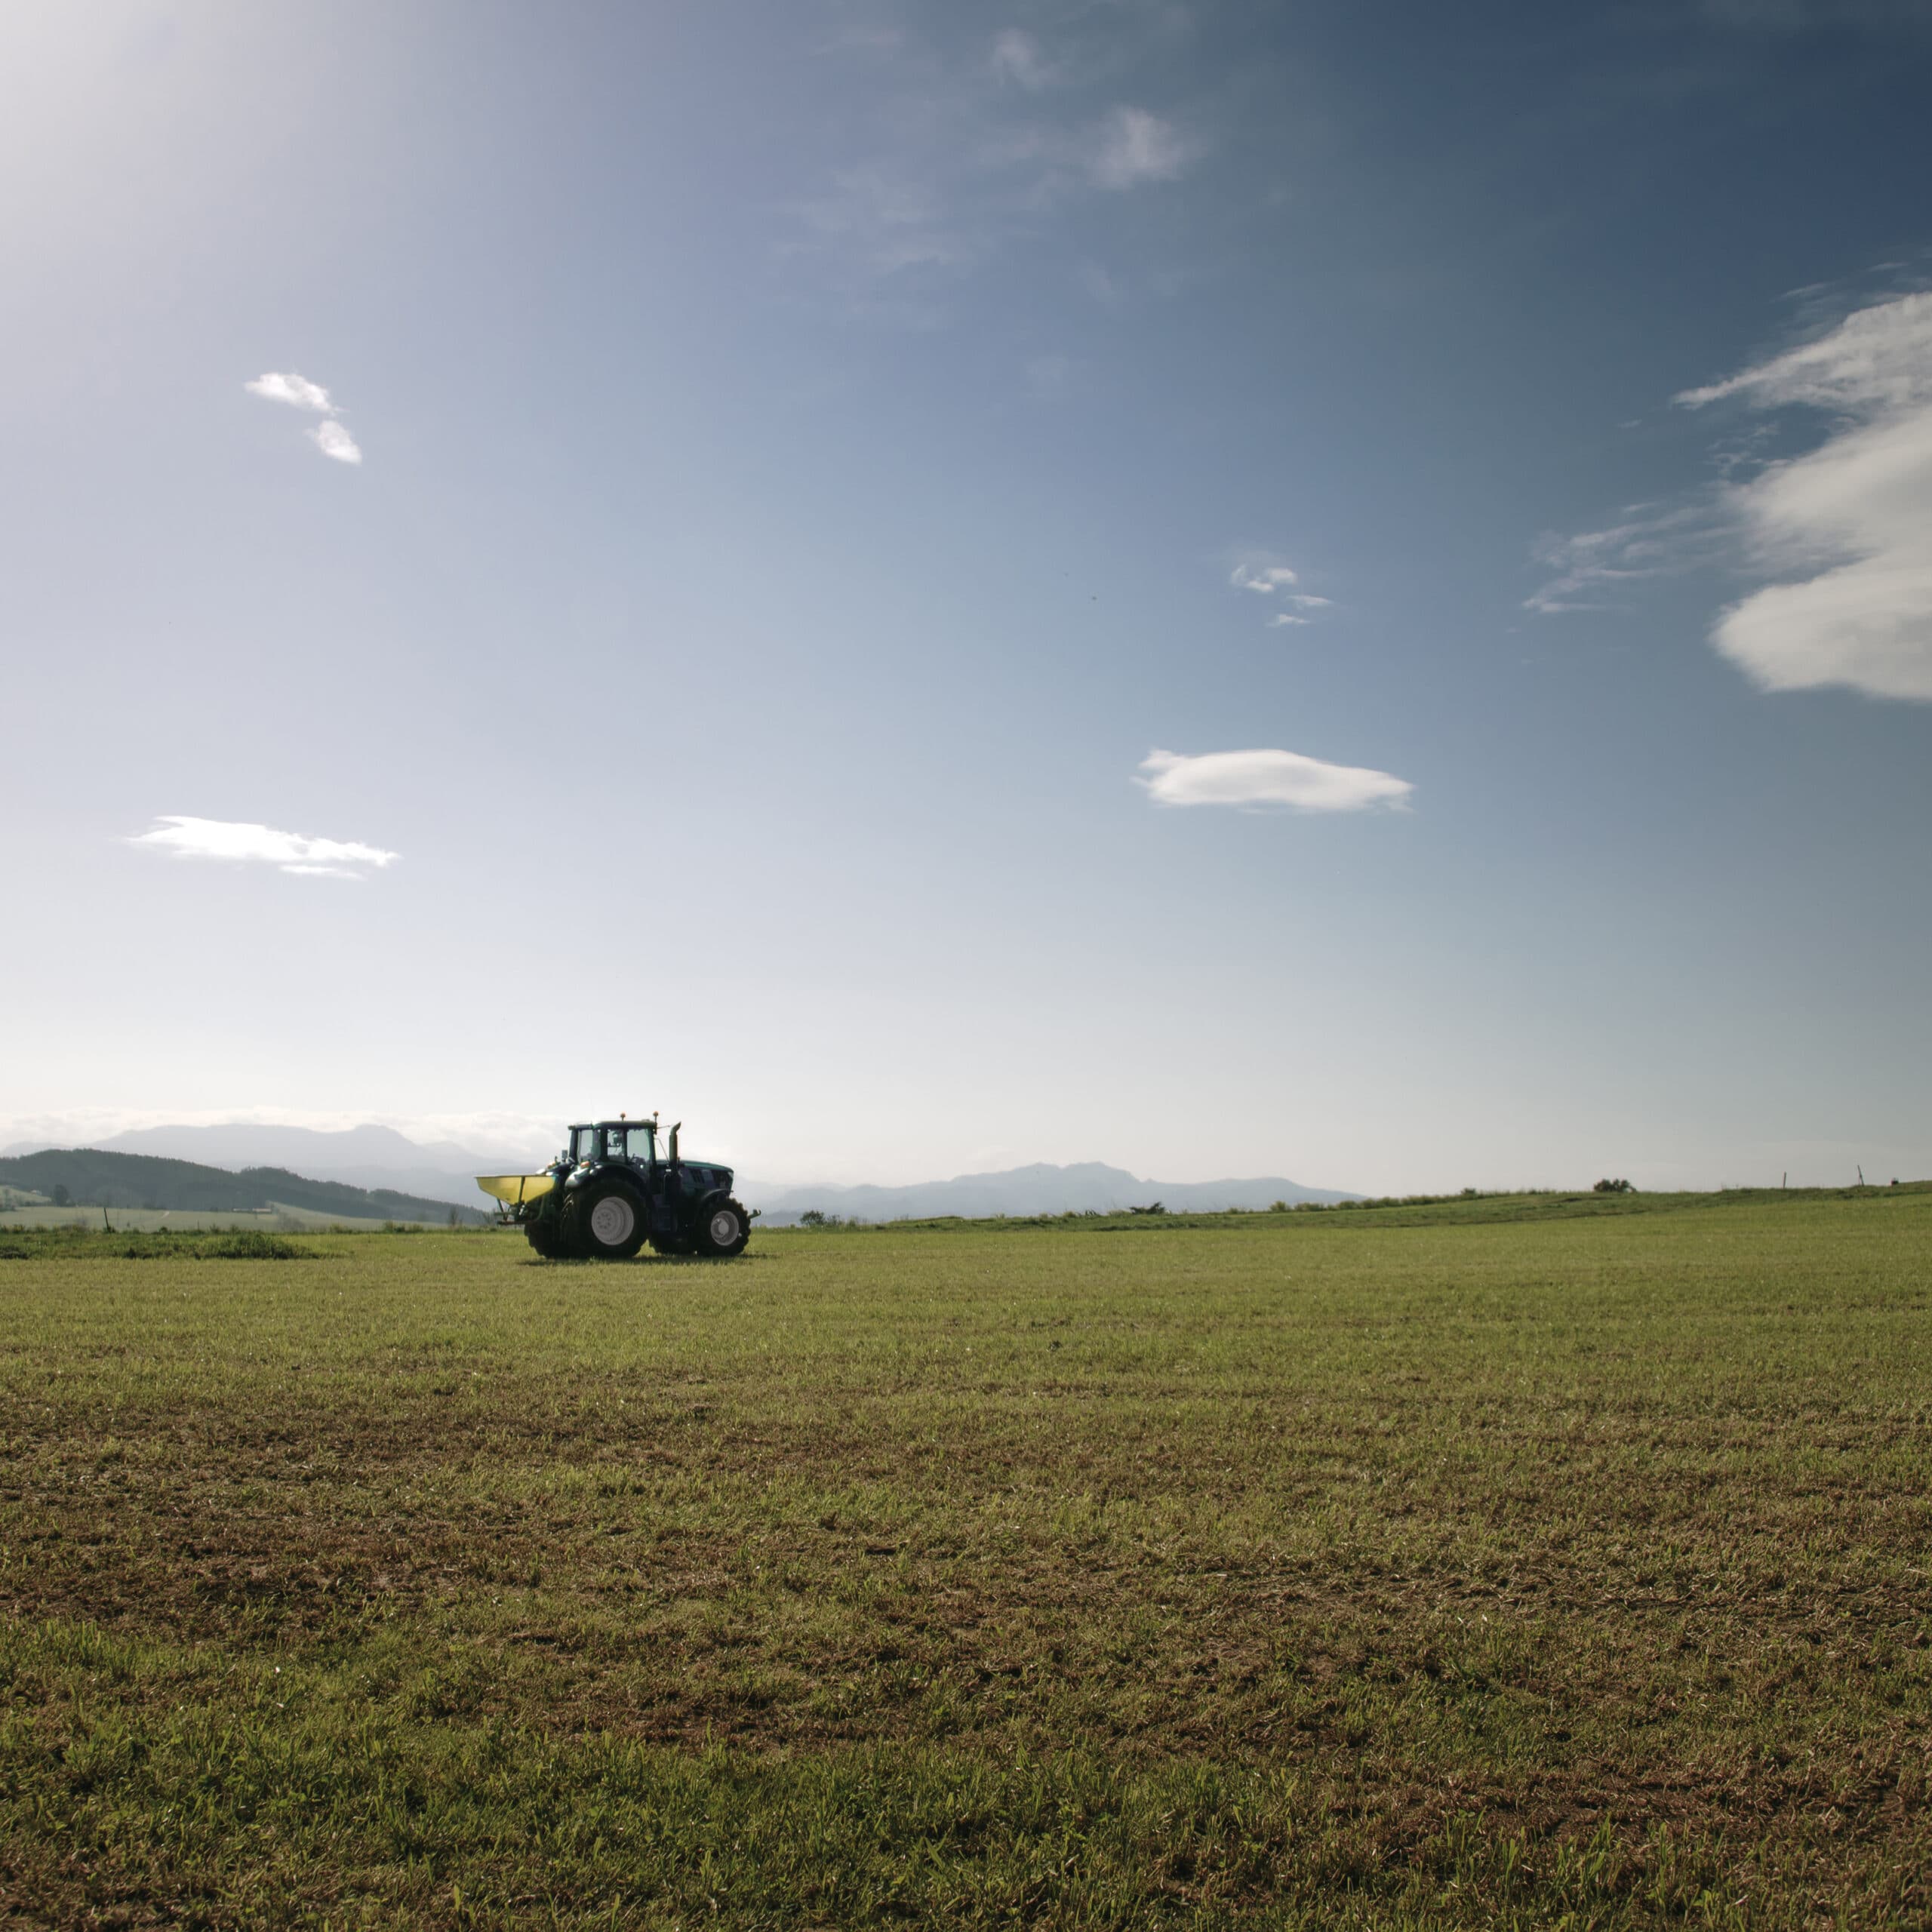 A tractor fertilizing a green field under a clear blue sky.